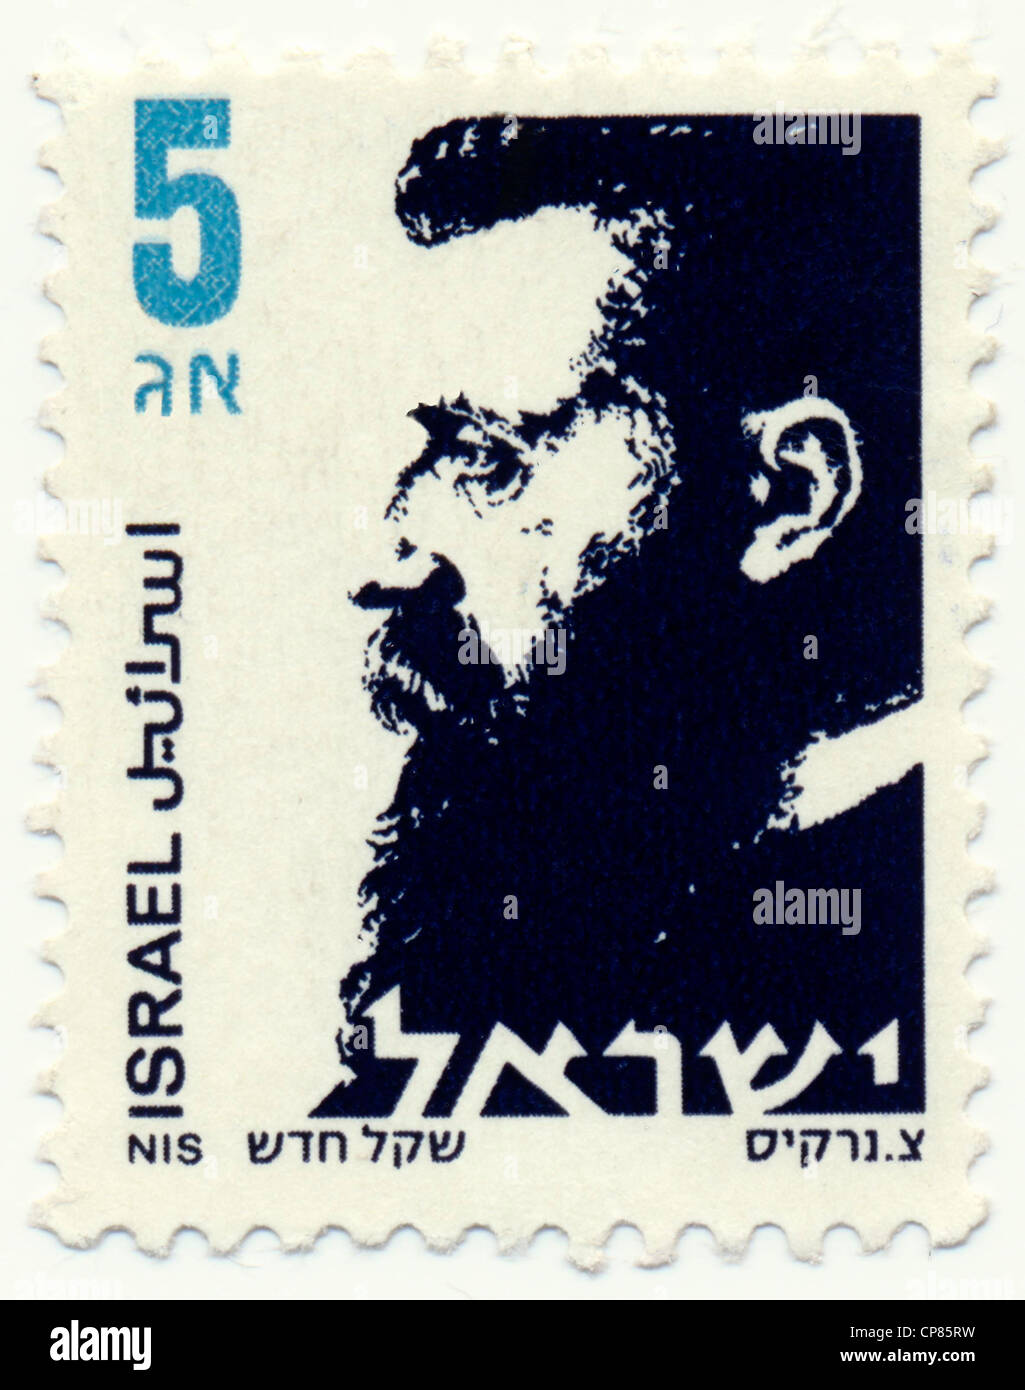 Centro storico di francobolli da Israele, Historische Briefmarken, il dottor Theodor Herzl, 1986, Israele, Asien Foto Stock